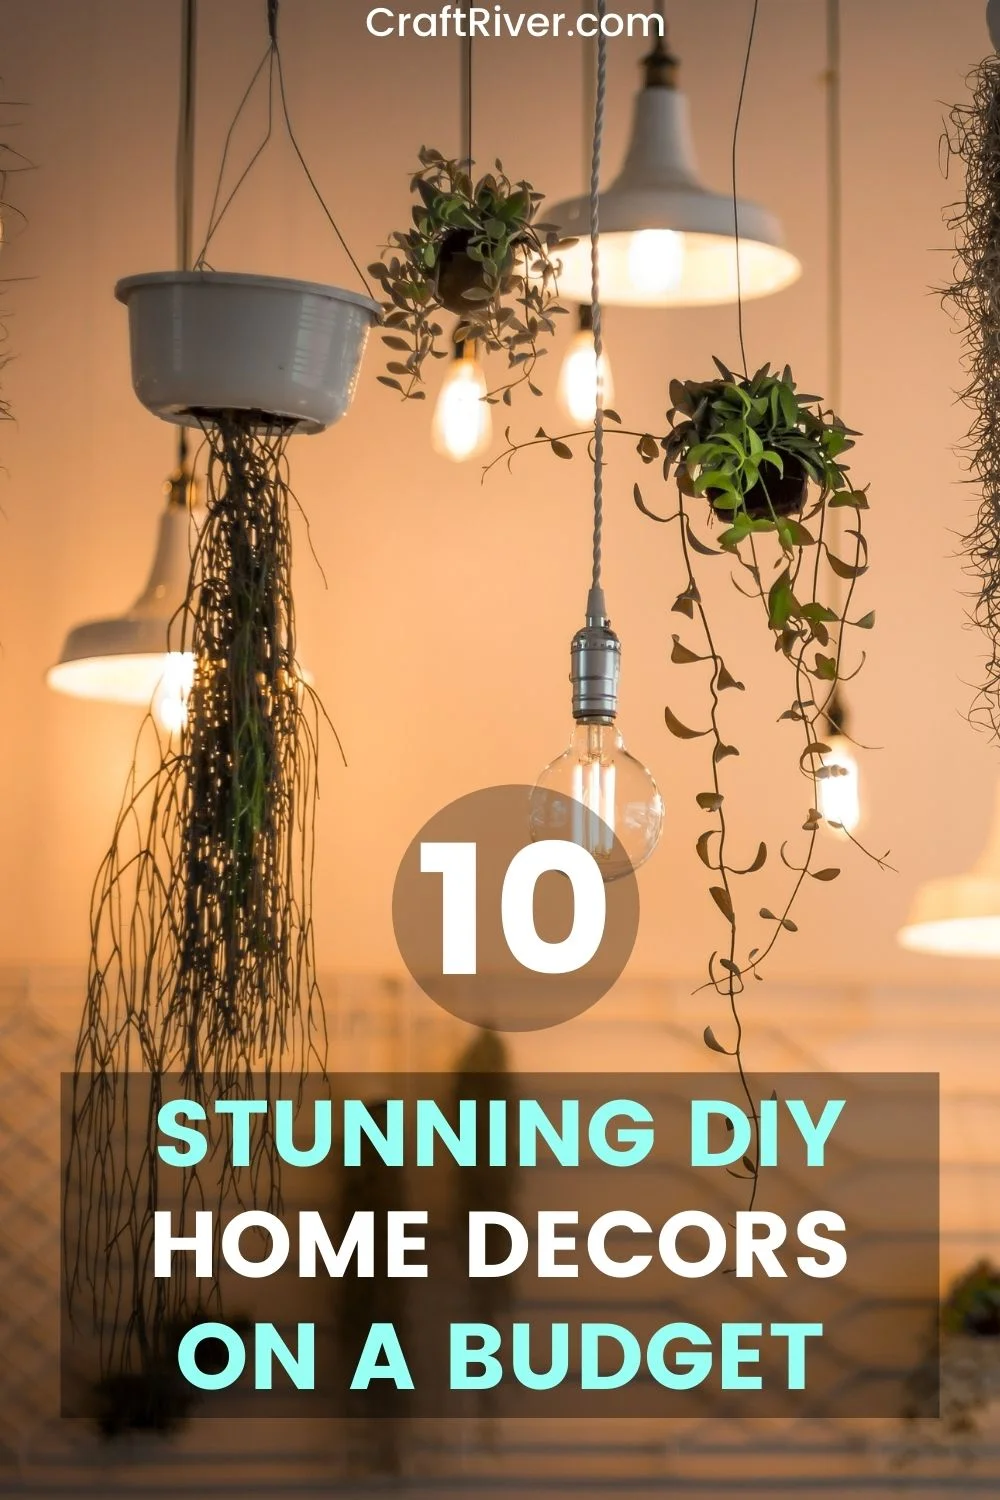 10 Stunning DIY Home Decor Ideas On a Budget